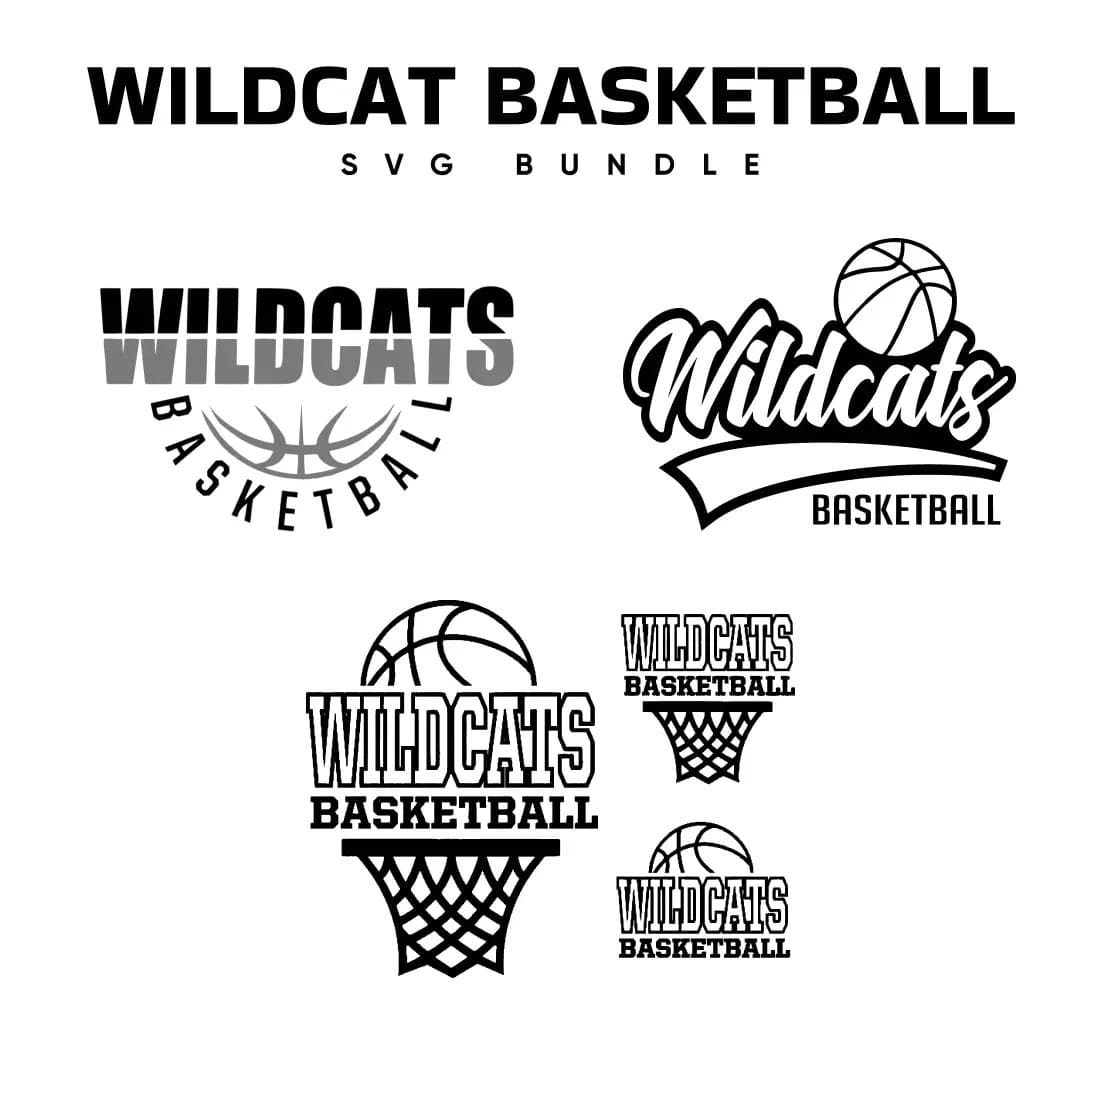 The wildcat basketball svg bundle.